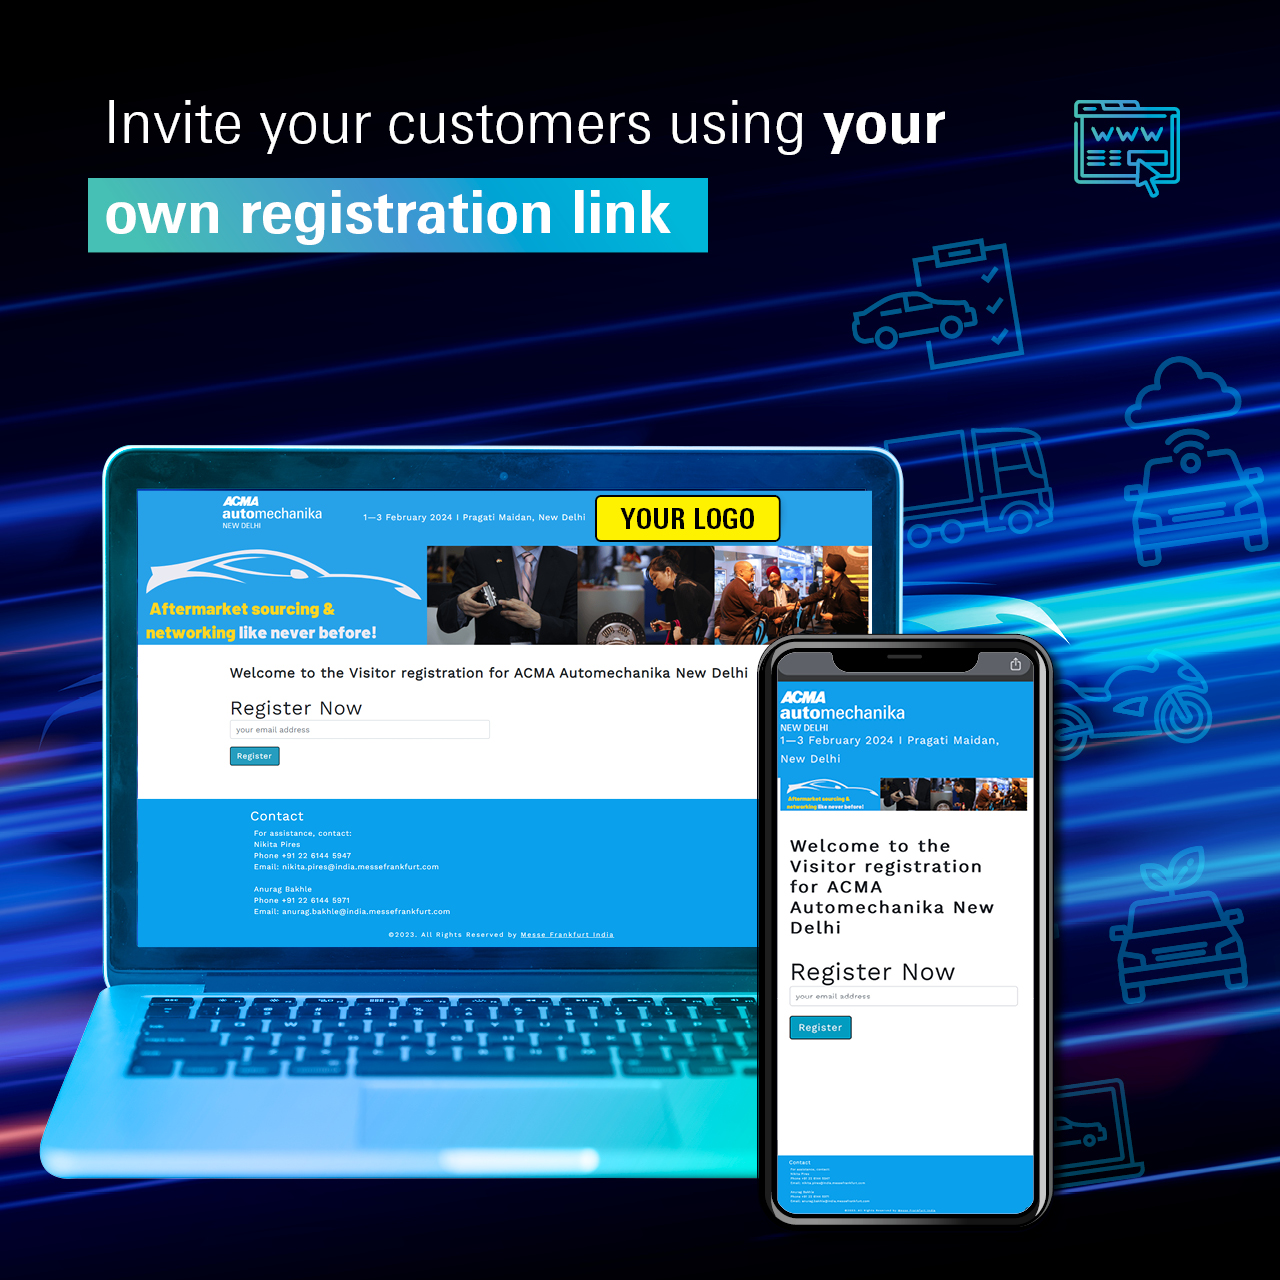 Customized registration link